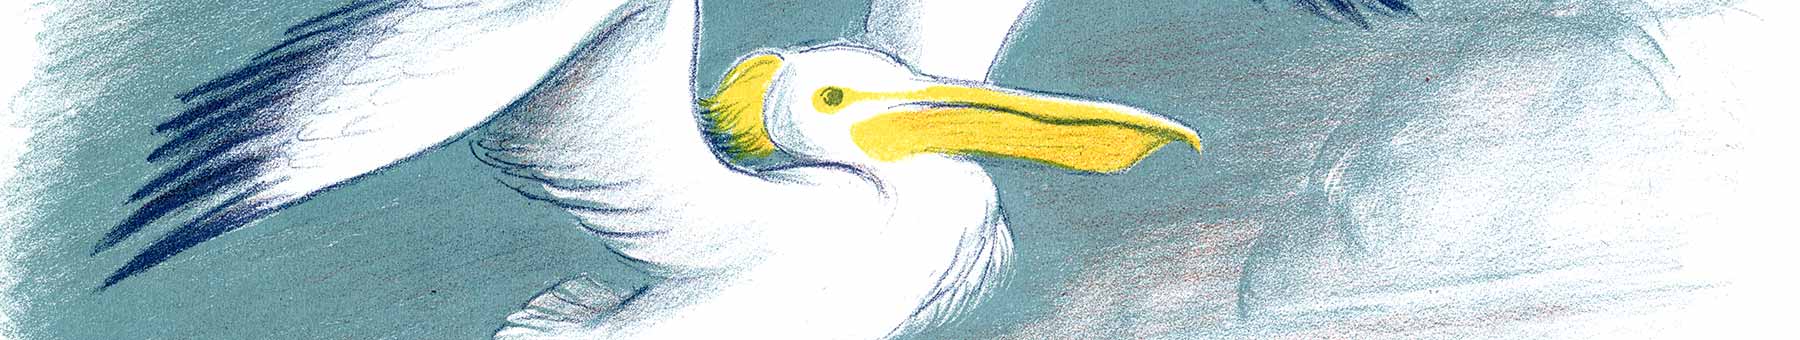 illustration of a pelican